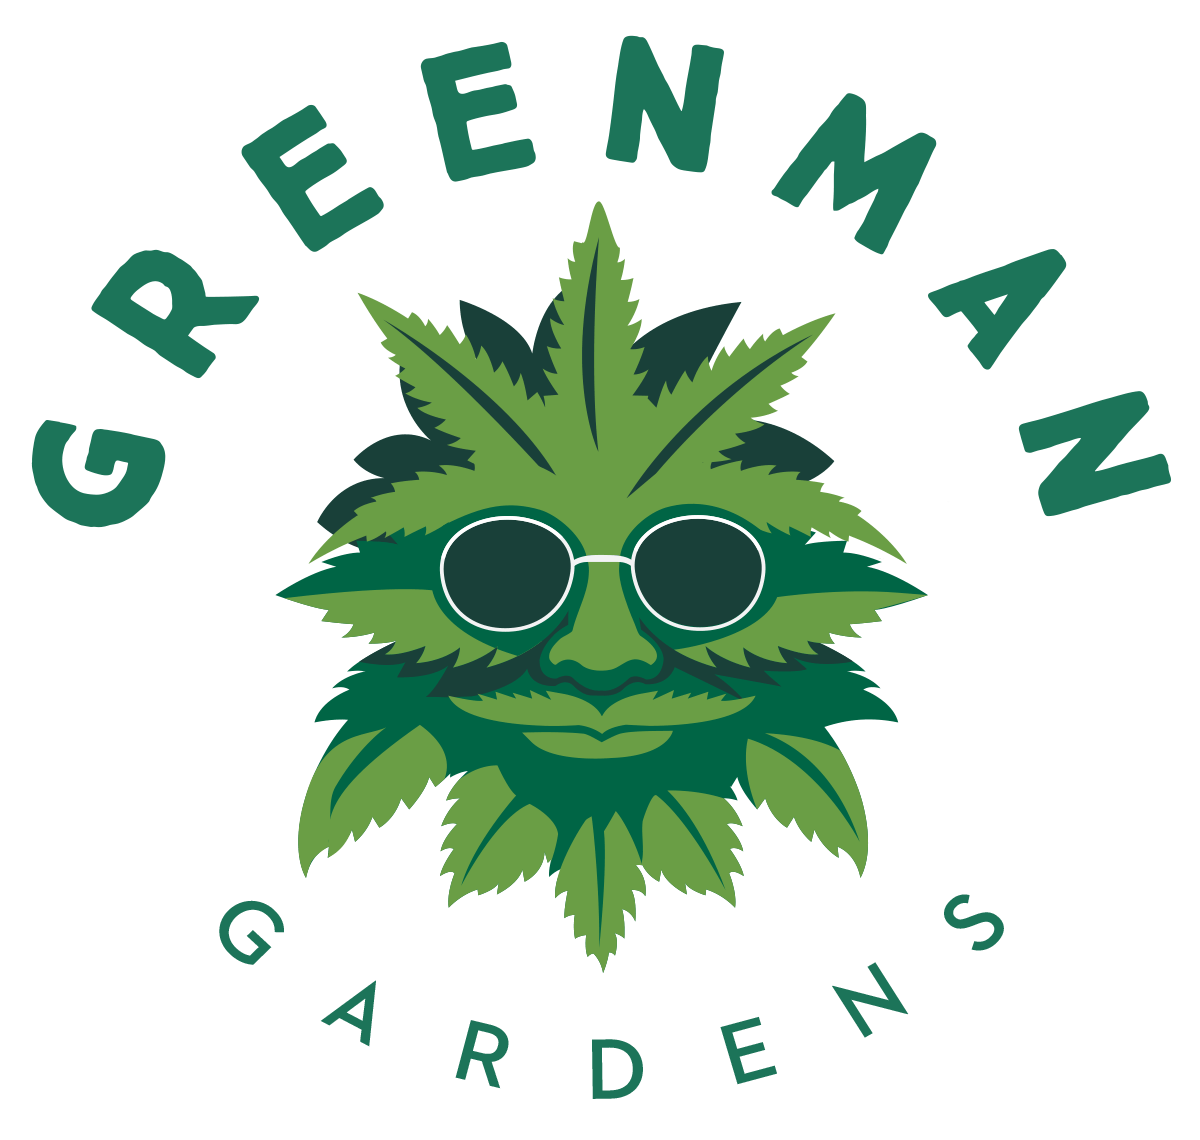 Greenman gardens logo